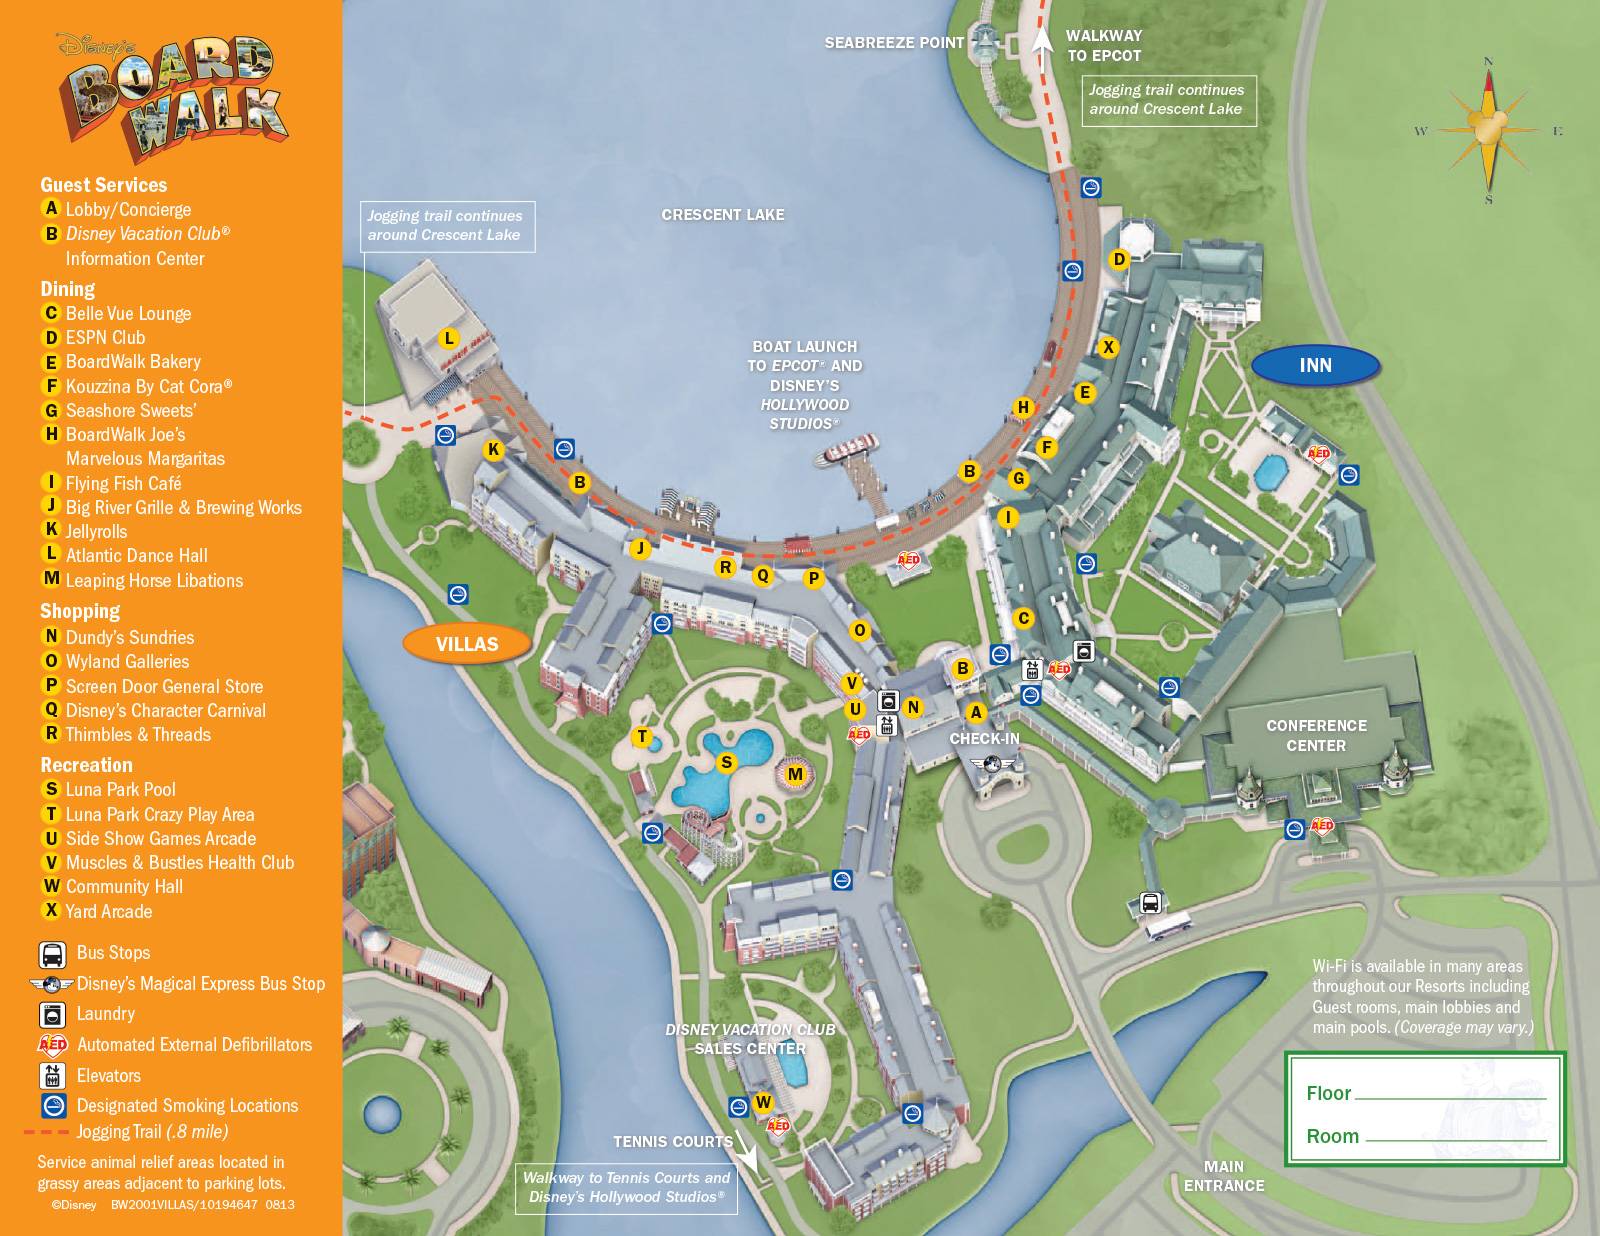 PHOTOS - New design of maps now at Walt Disney World resort hotels